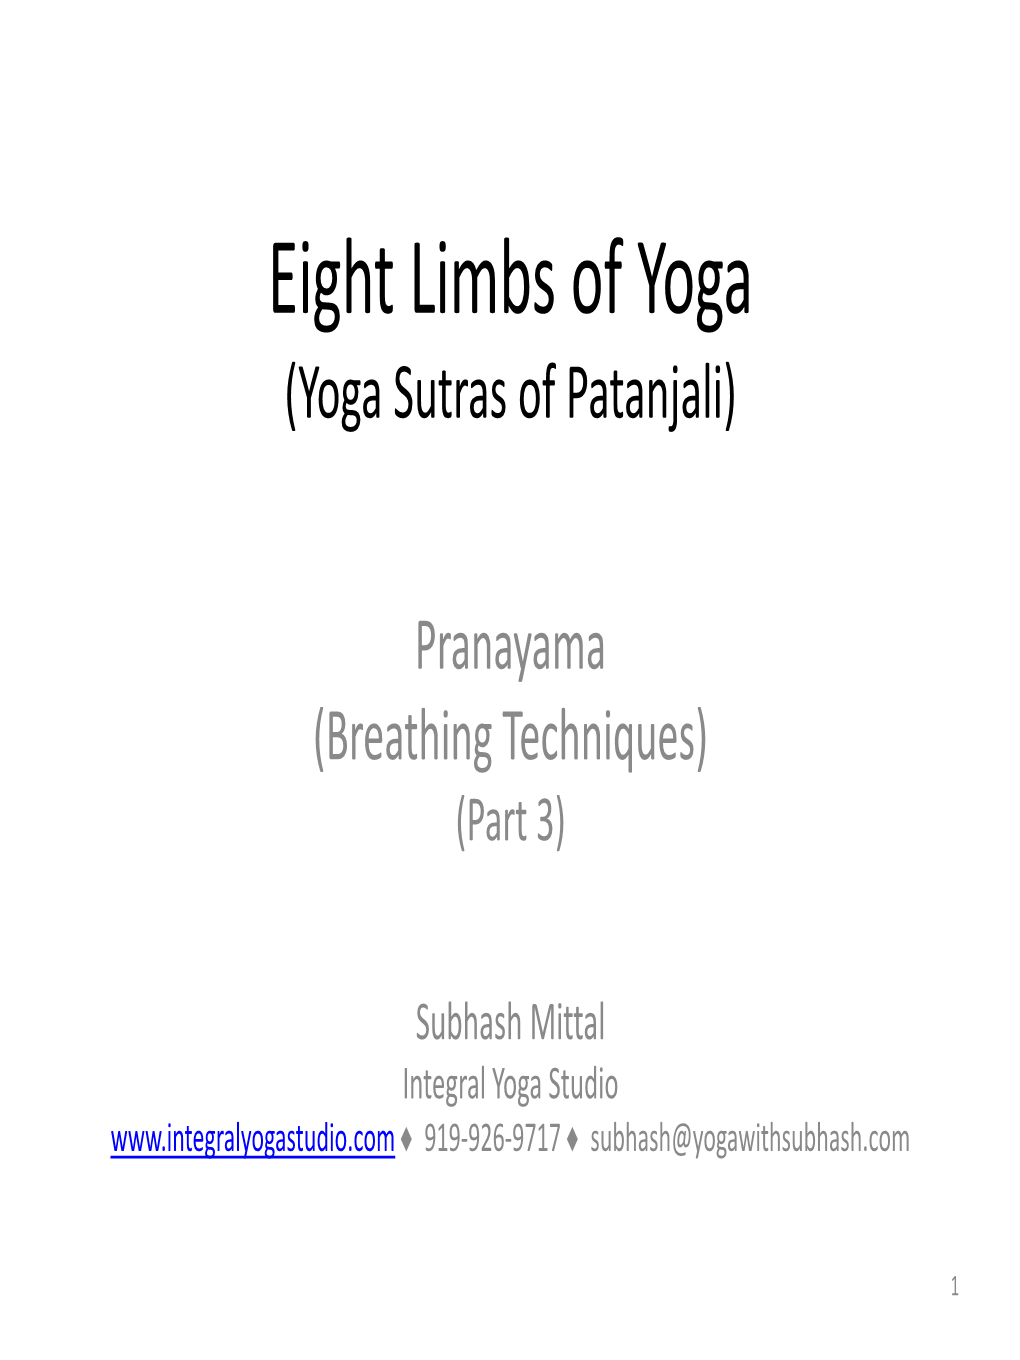 Yoga Sutras of Patanjali)